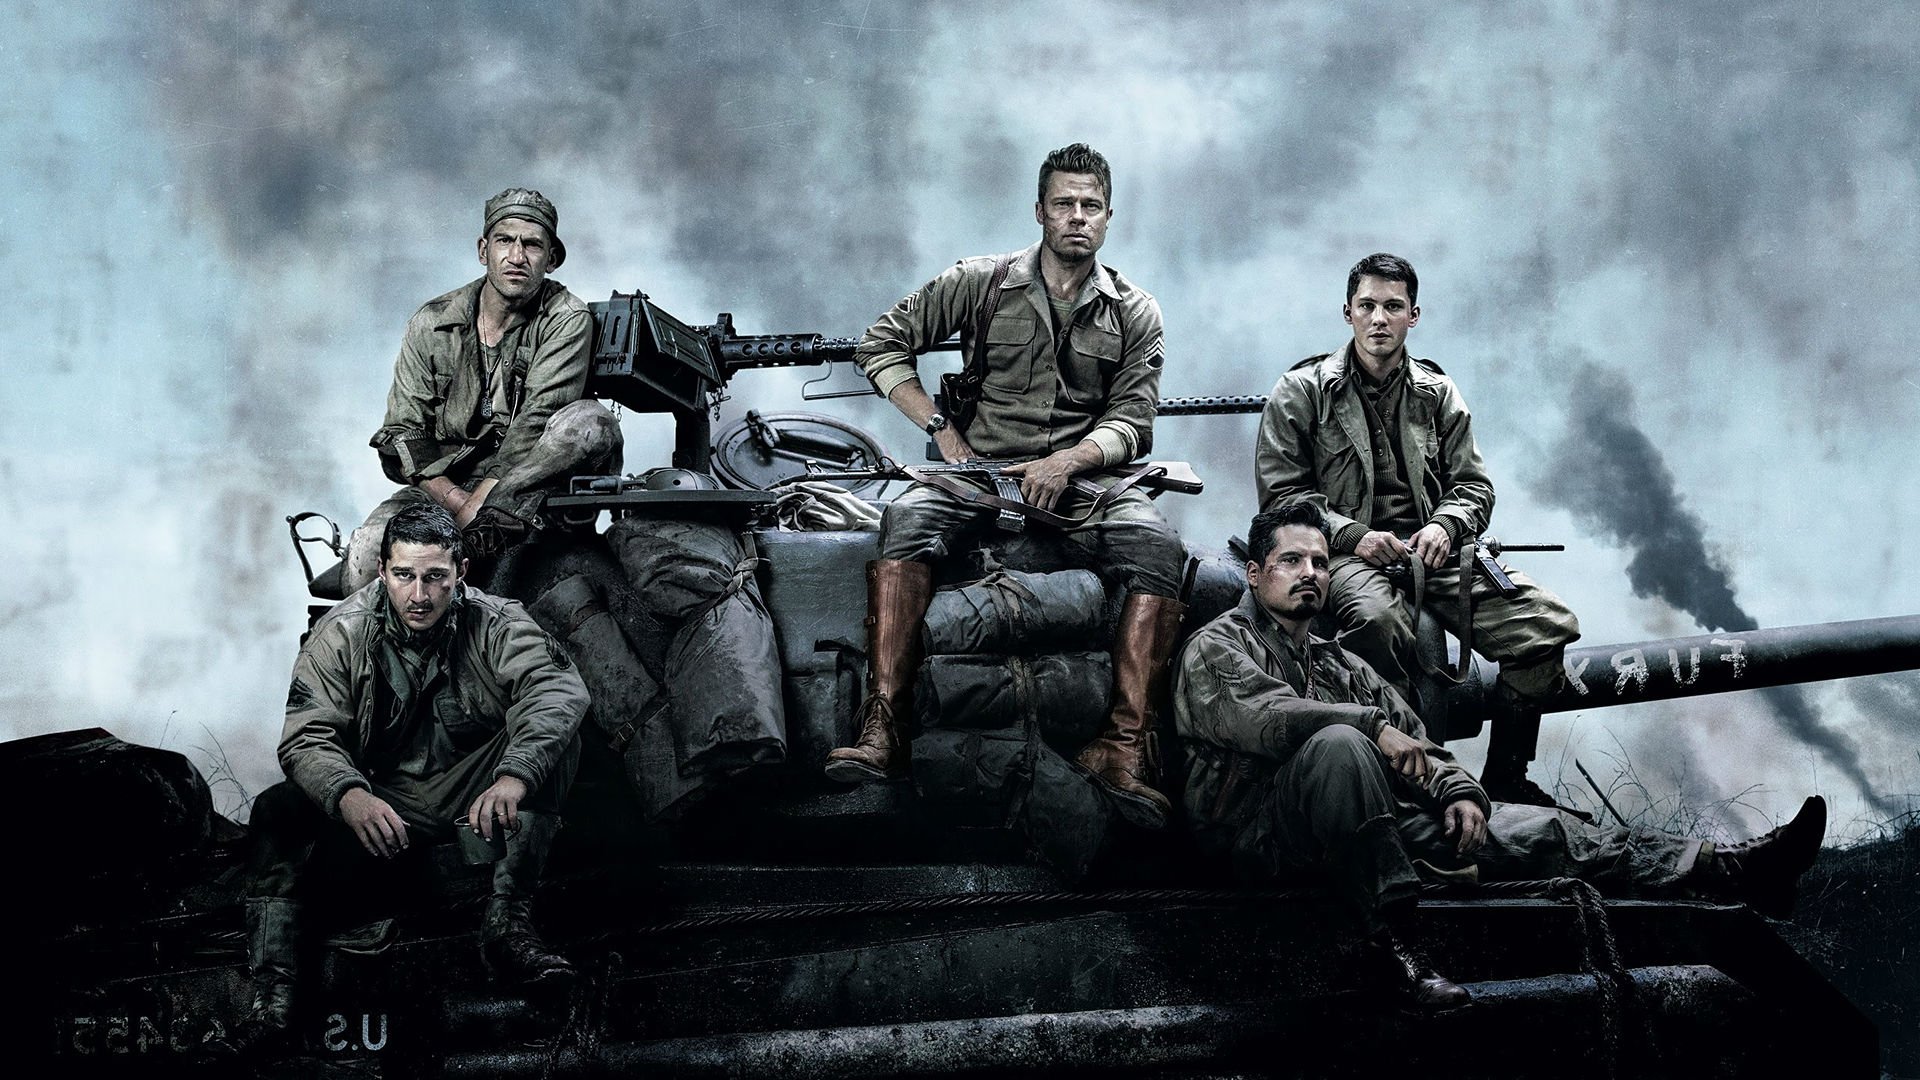 Fury Action Drama War Brad Pitt Military Tank 1fury Fighting